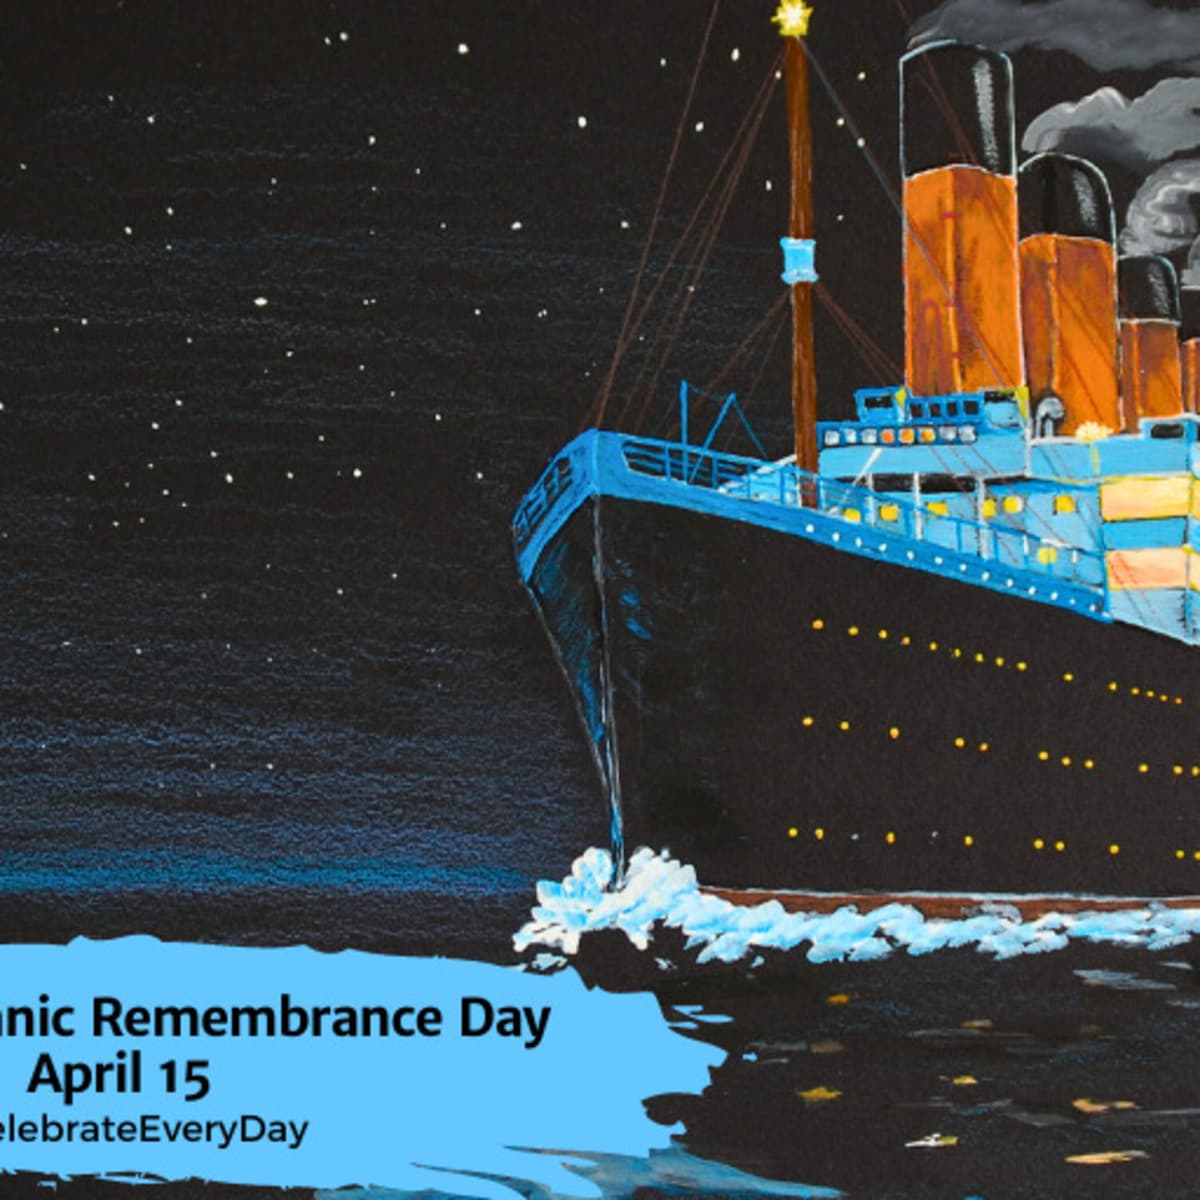 NATIONAL TITANIC REMEMBRANCE DAY - April 15 - National Day Calendar